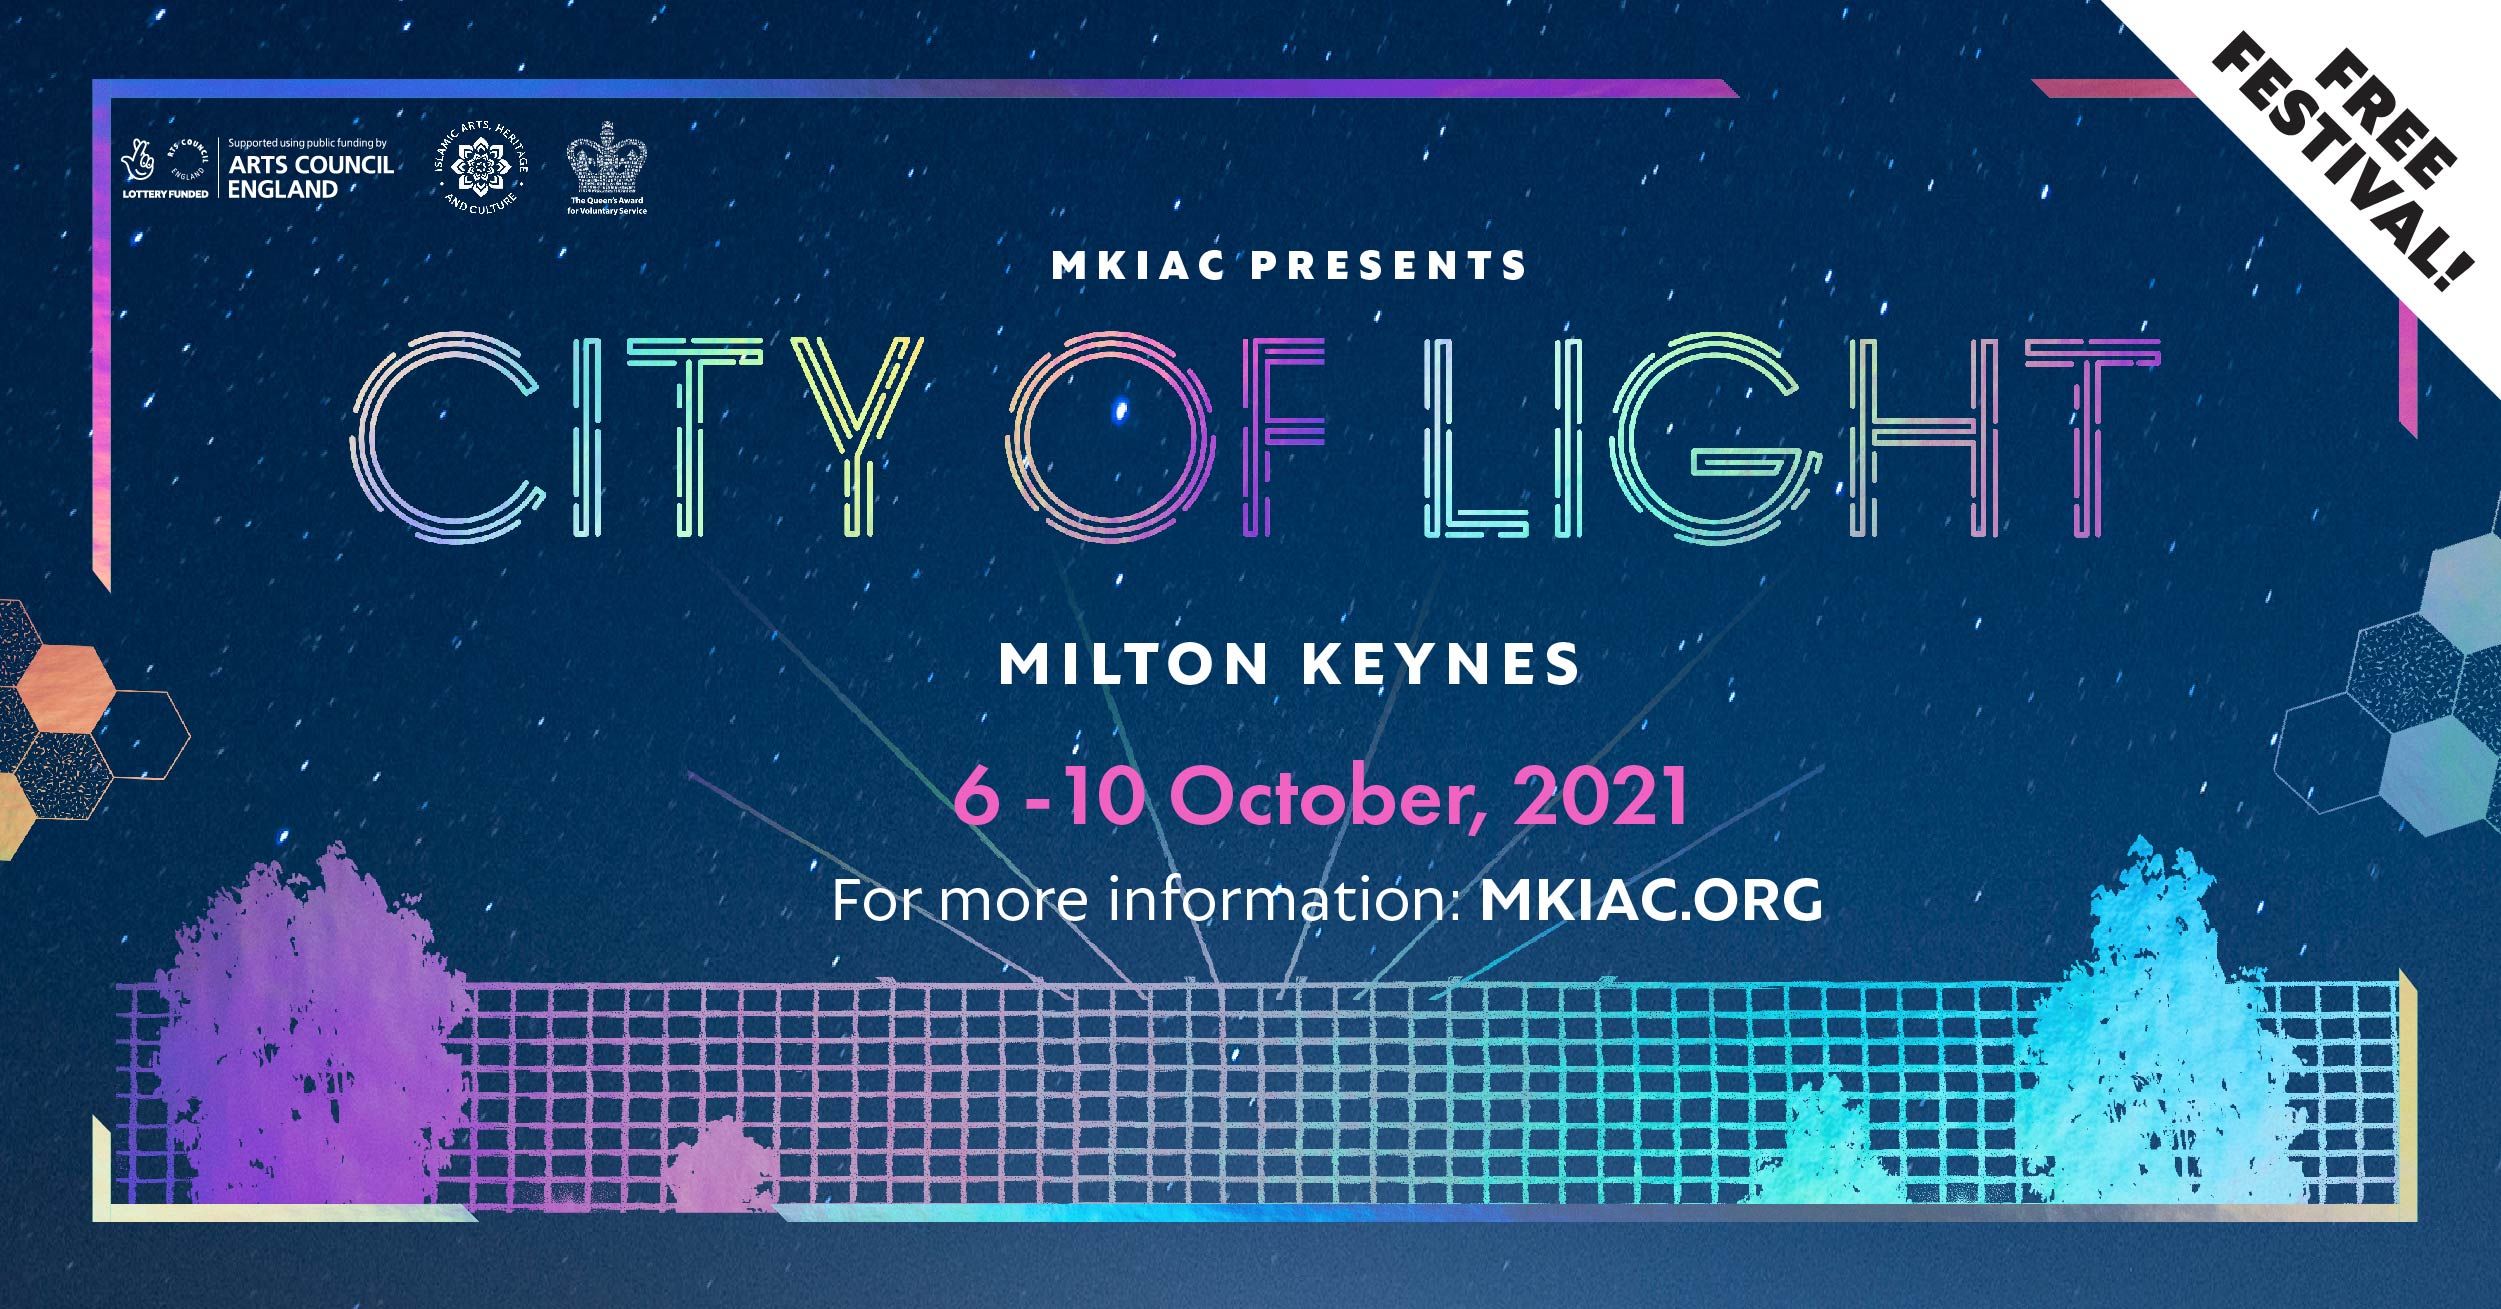 City of Light festival comes to Milton Keynes